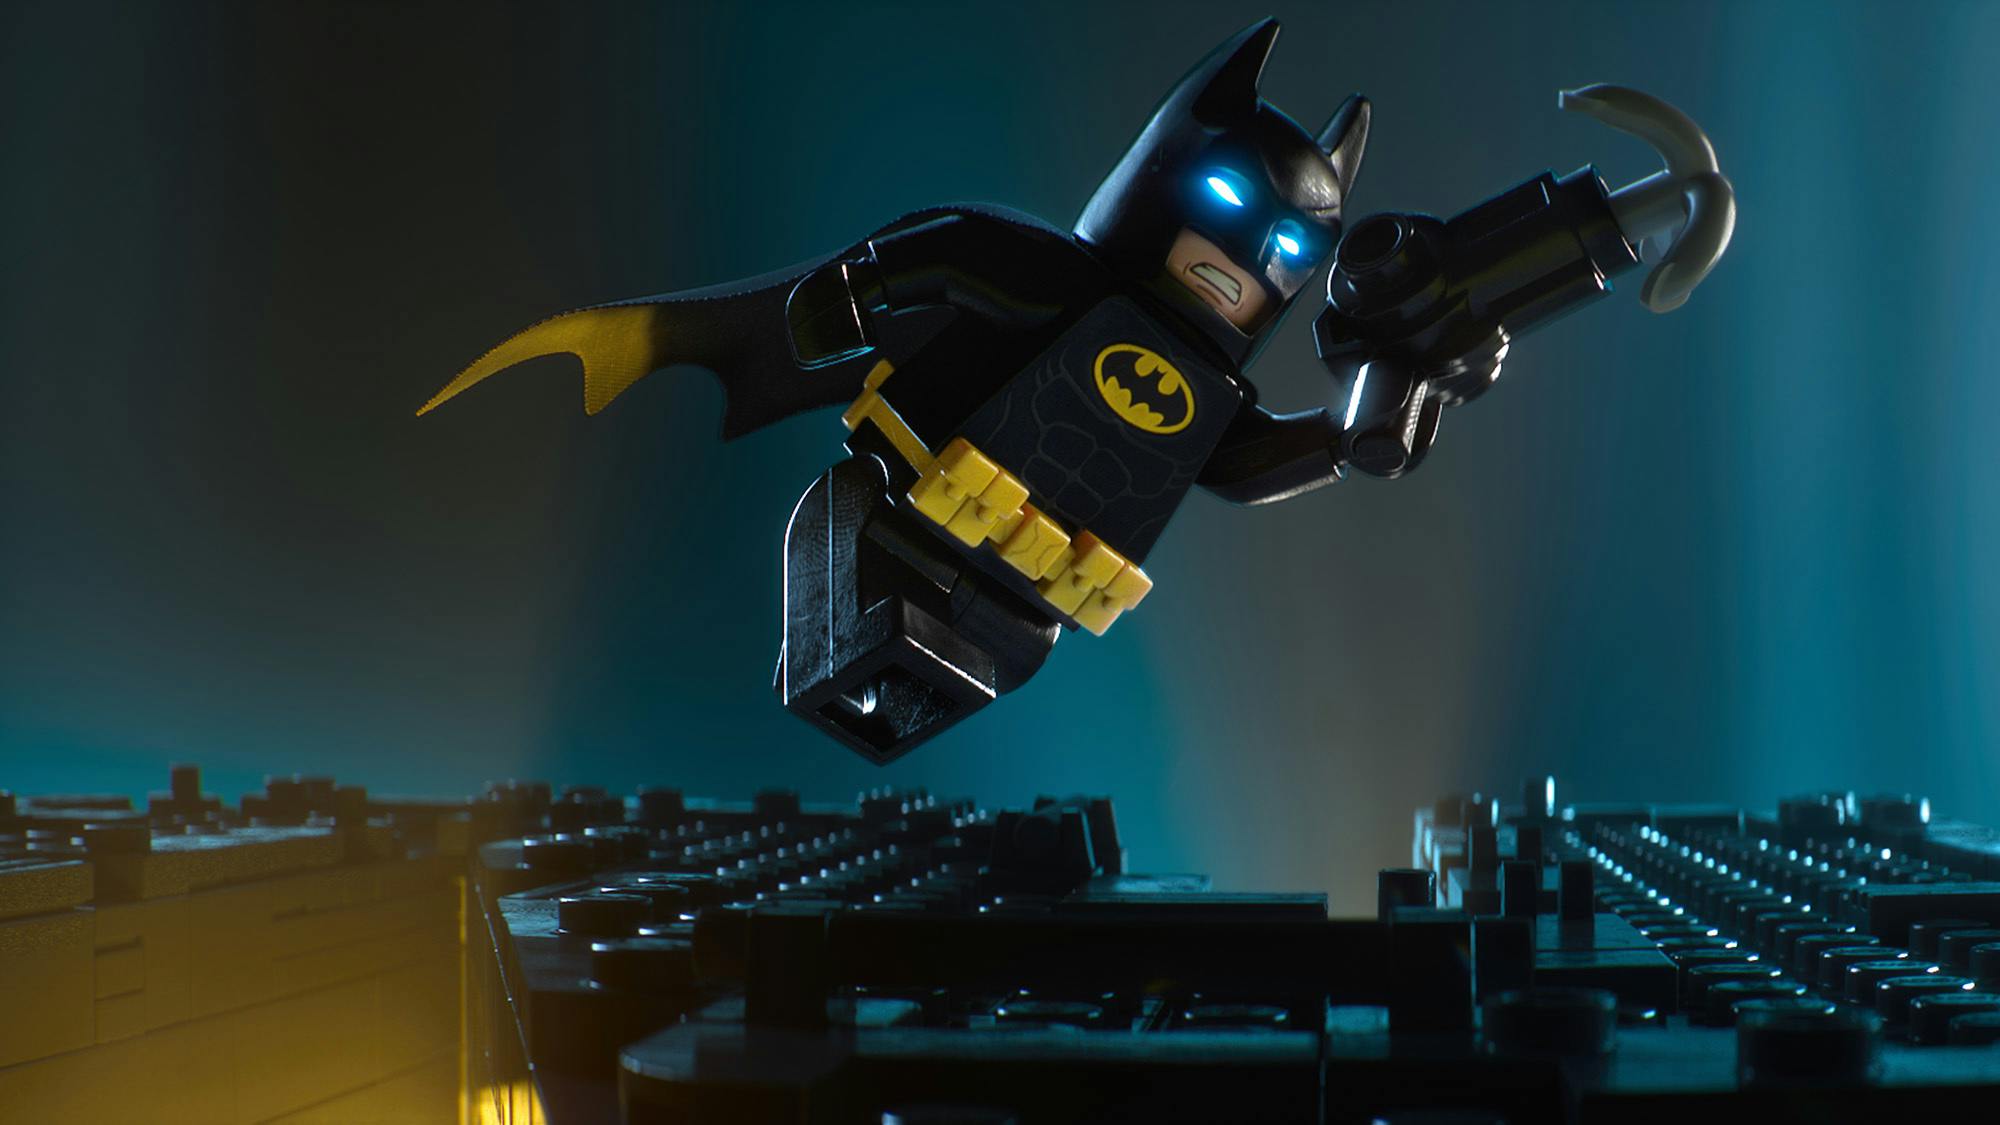 You Deserve This 'Lego Batman' Trailer